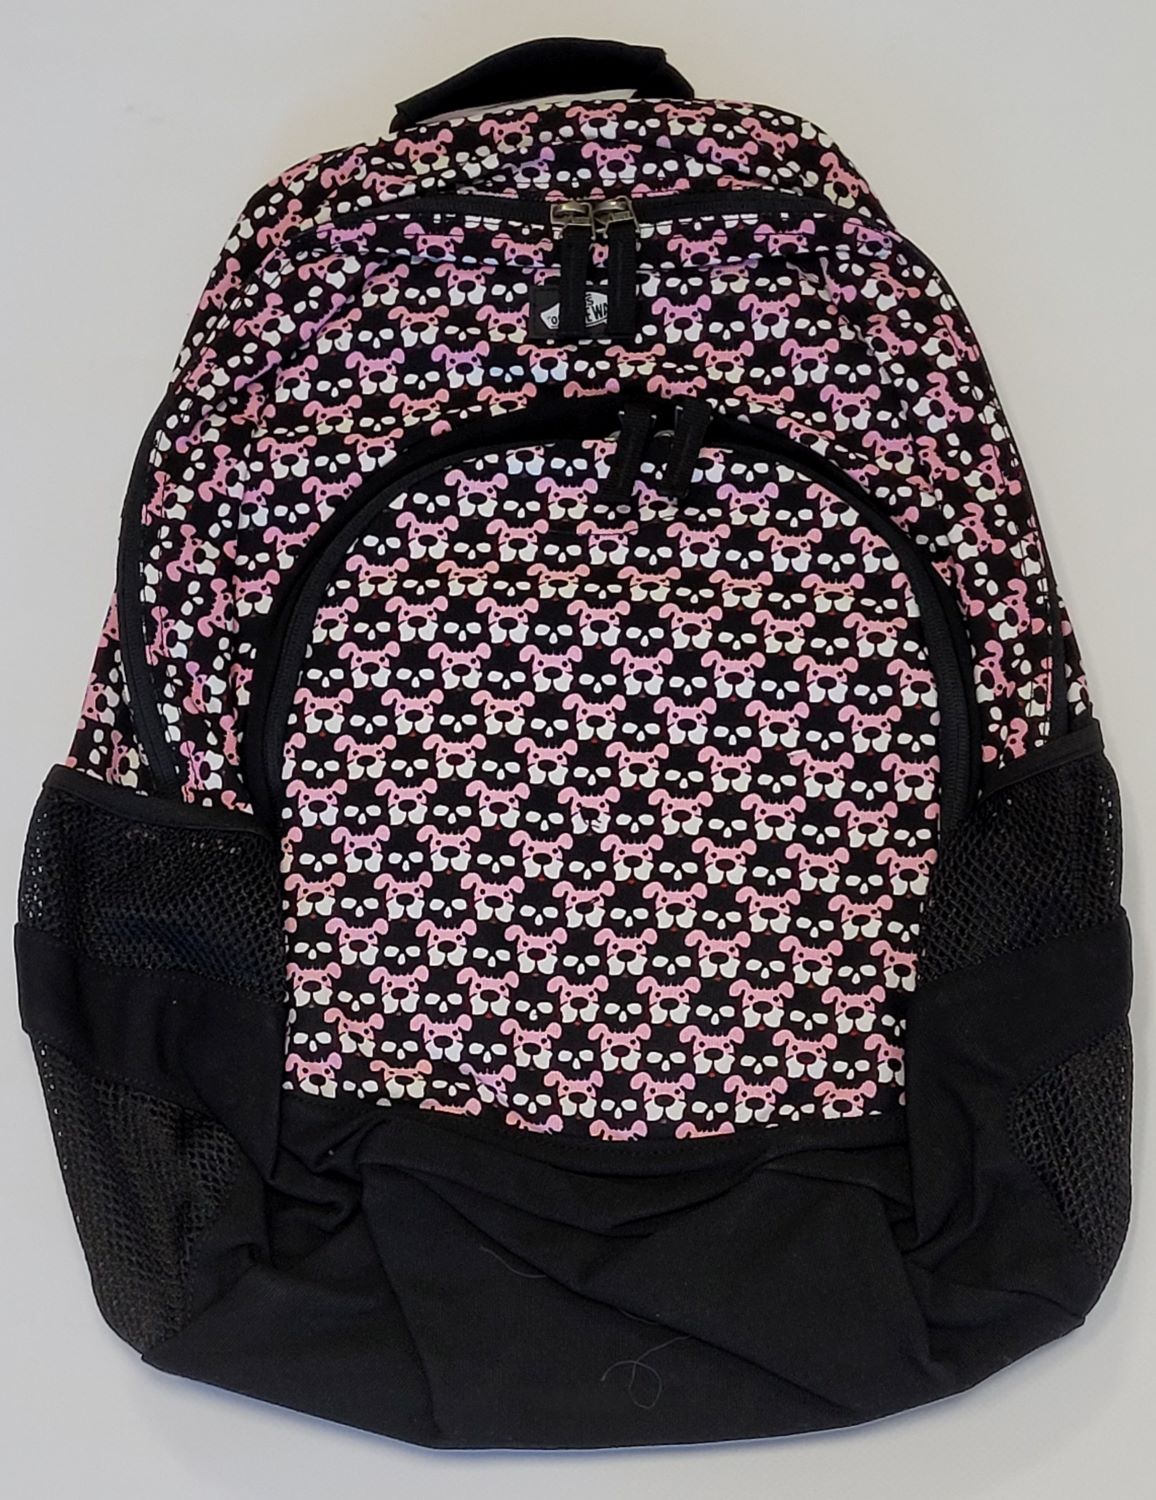 dámský batoh VANS Skull puppy black pink backpack